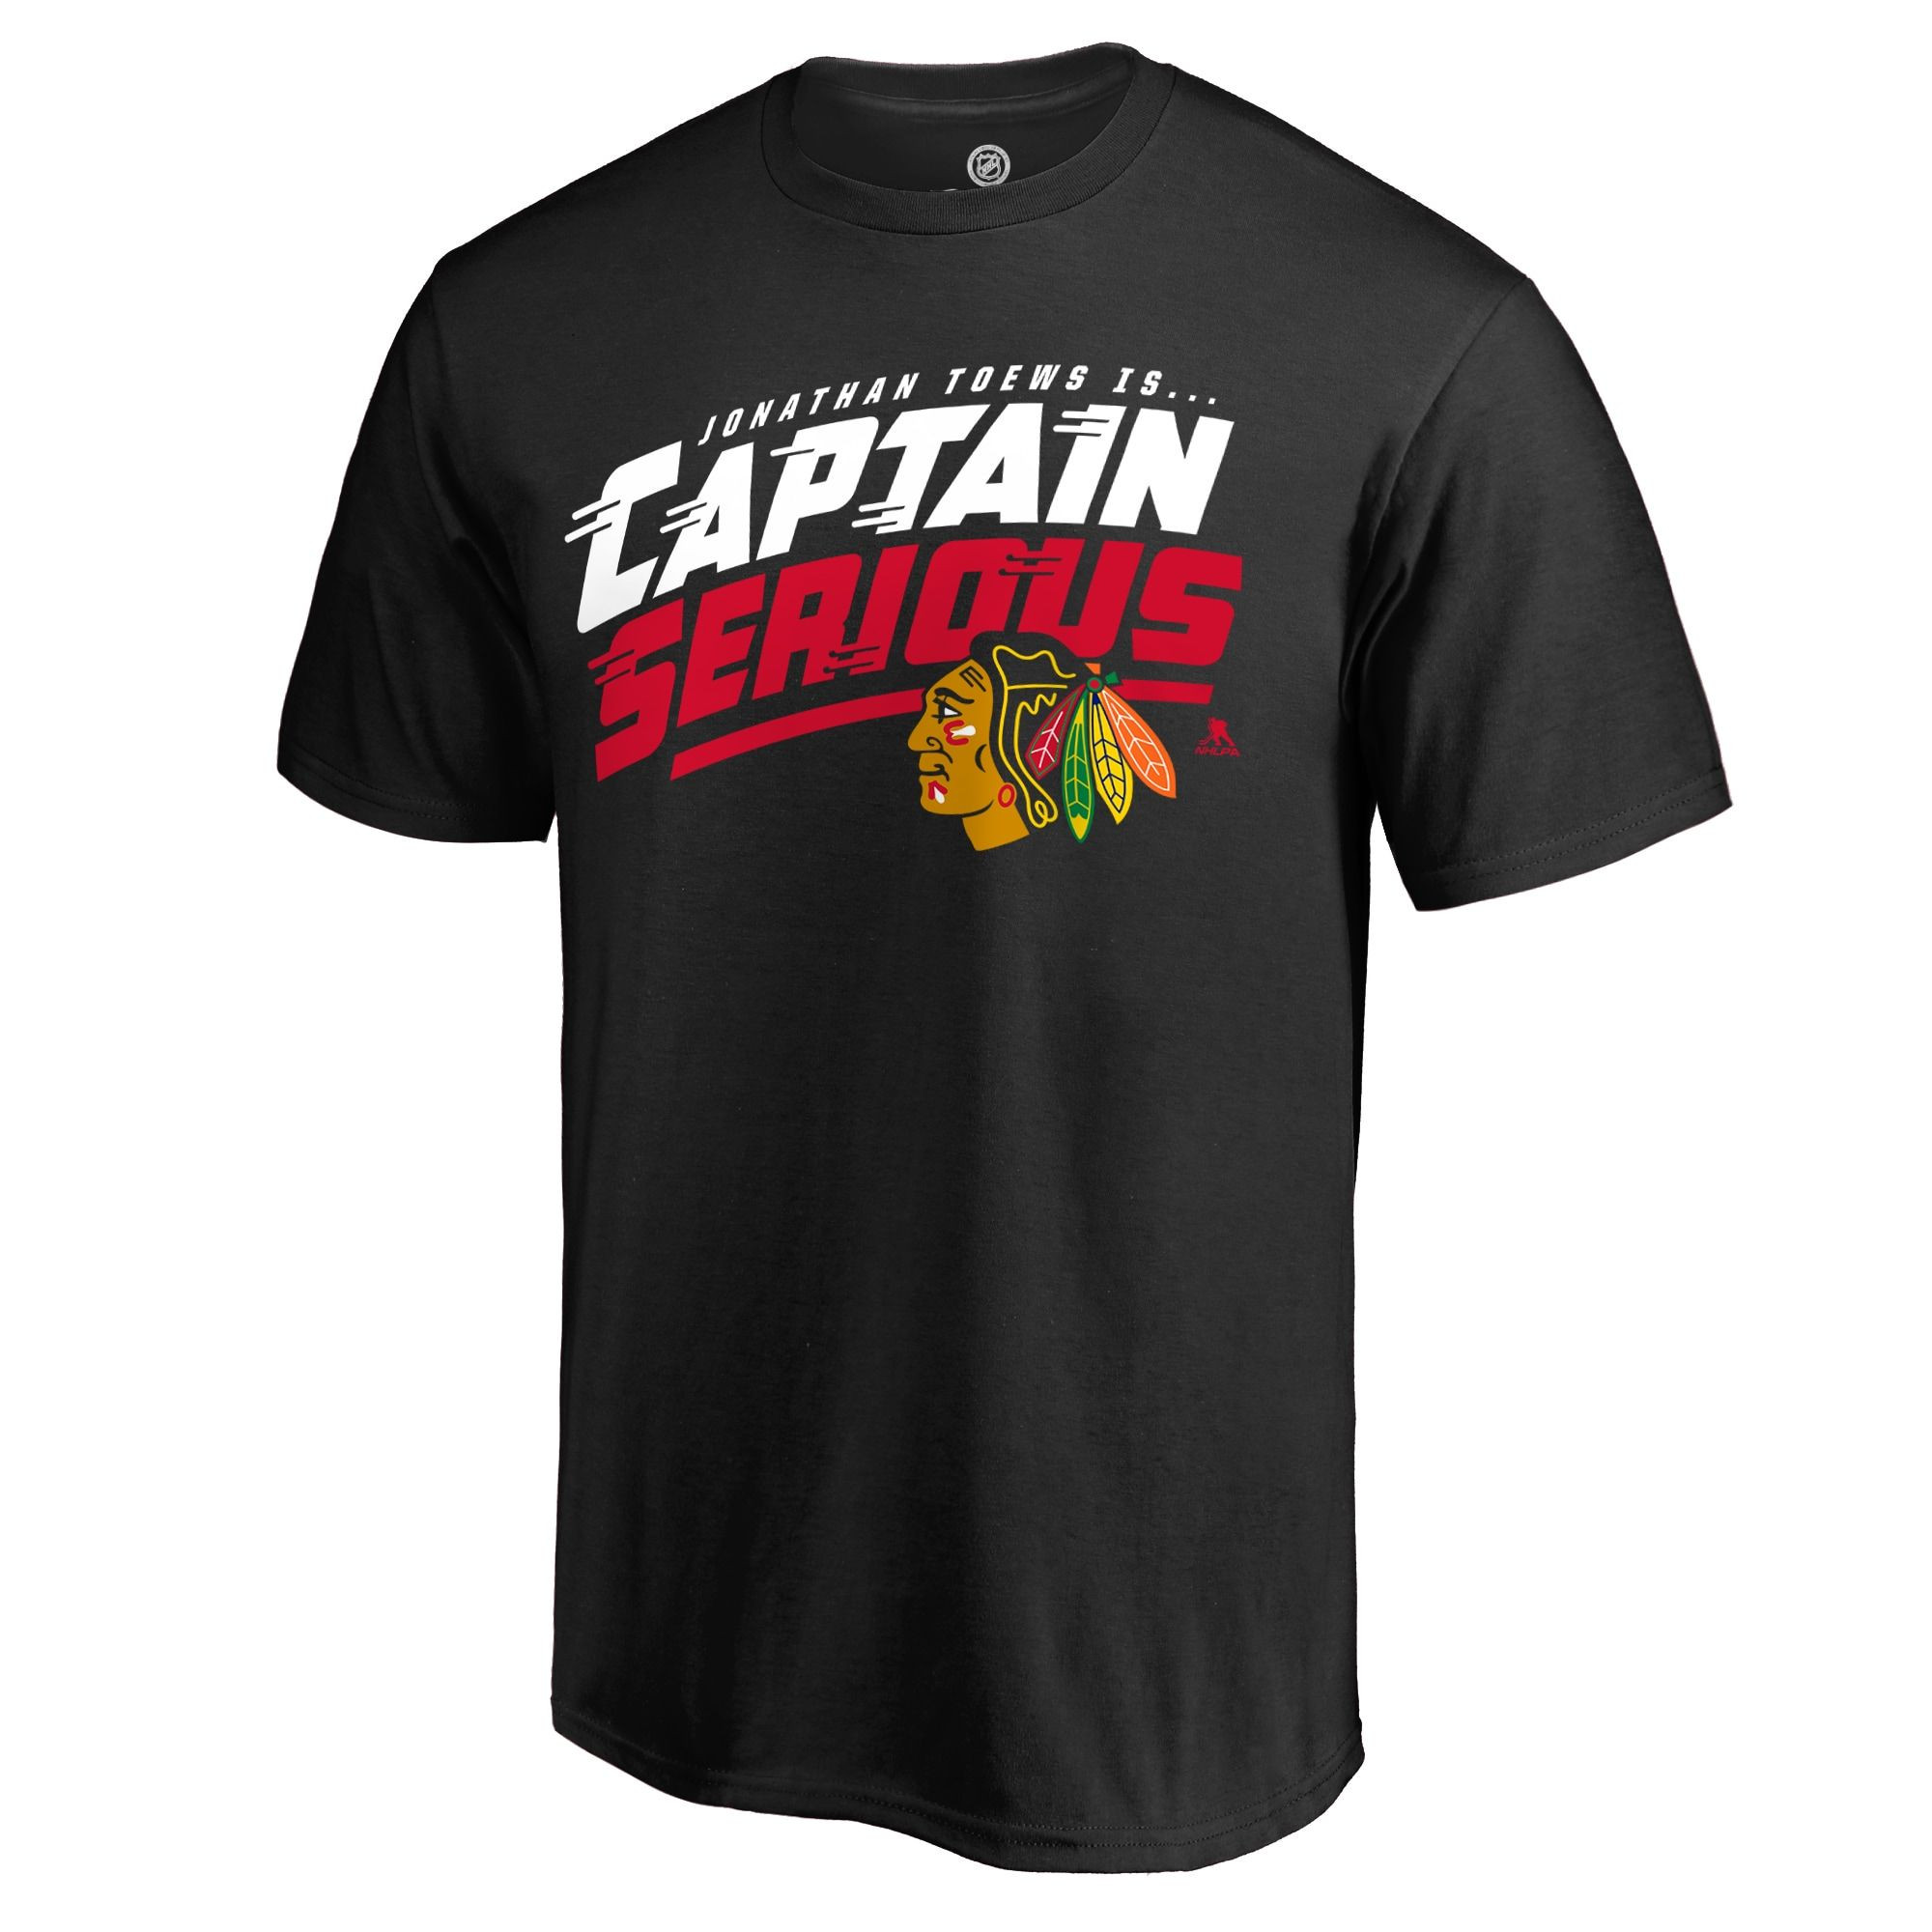 Men's Fanatics Branded Jonathan Toews Black Chicago Blackhawks Hometown Collection Captain Serious T-Shirt